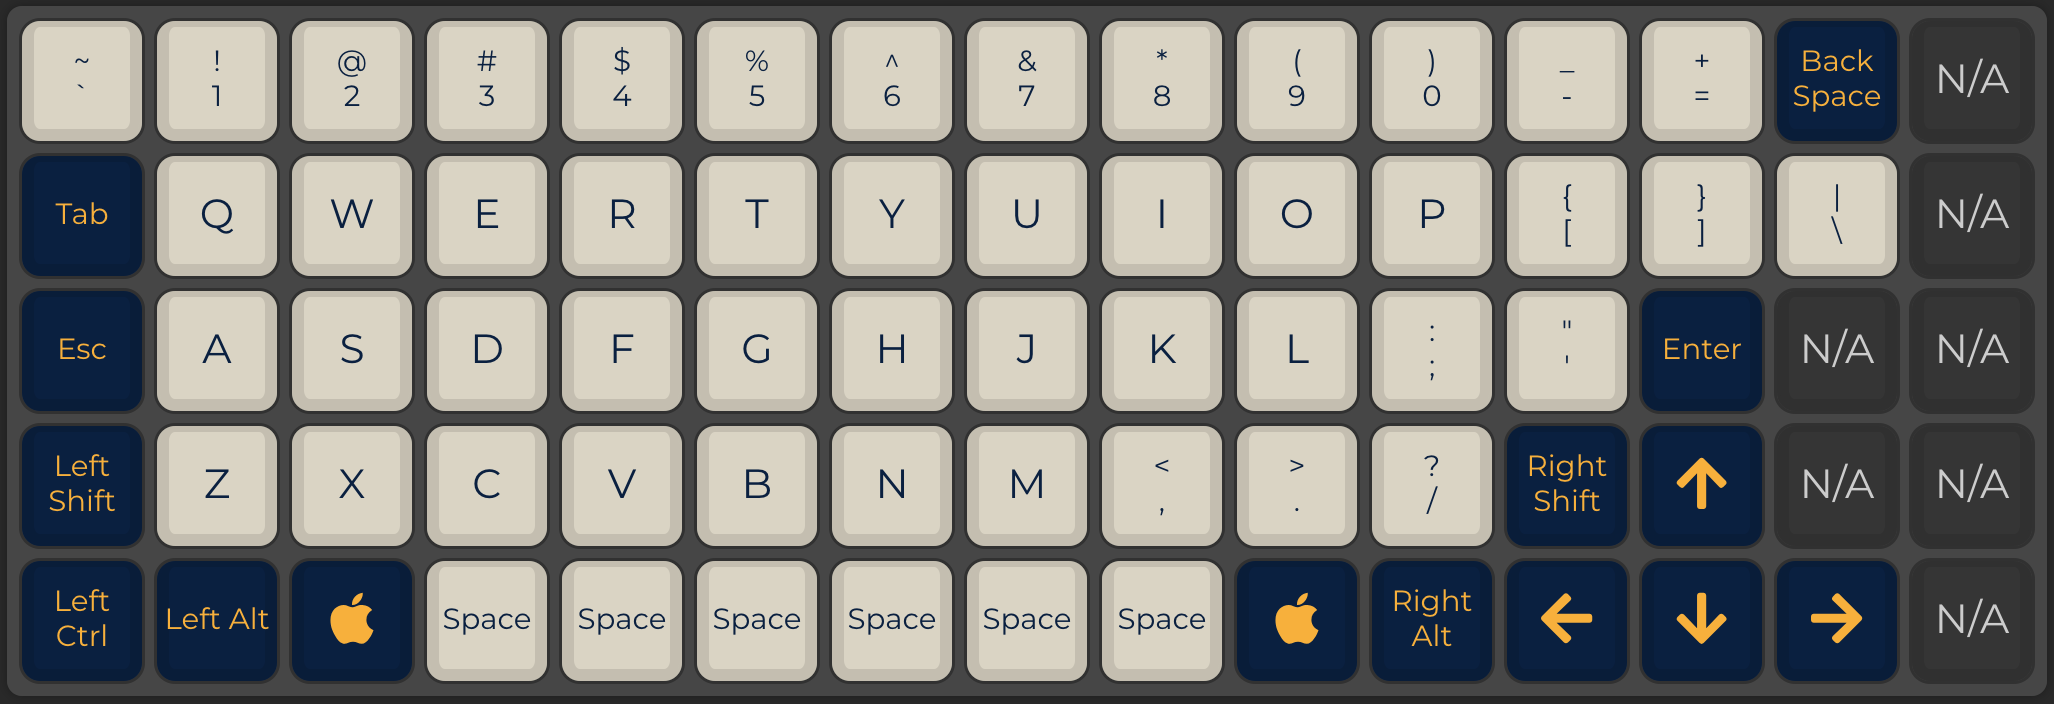 Custom layout for XD75 keyboard